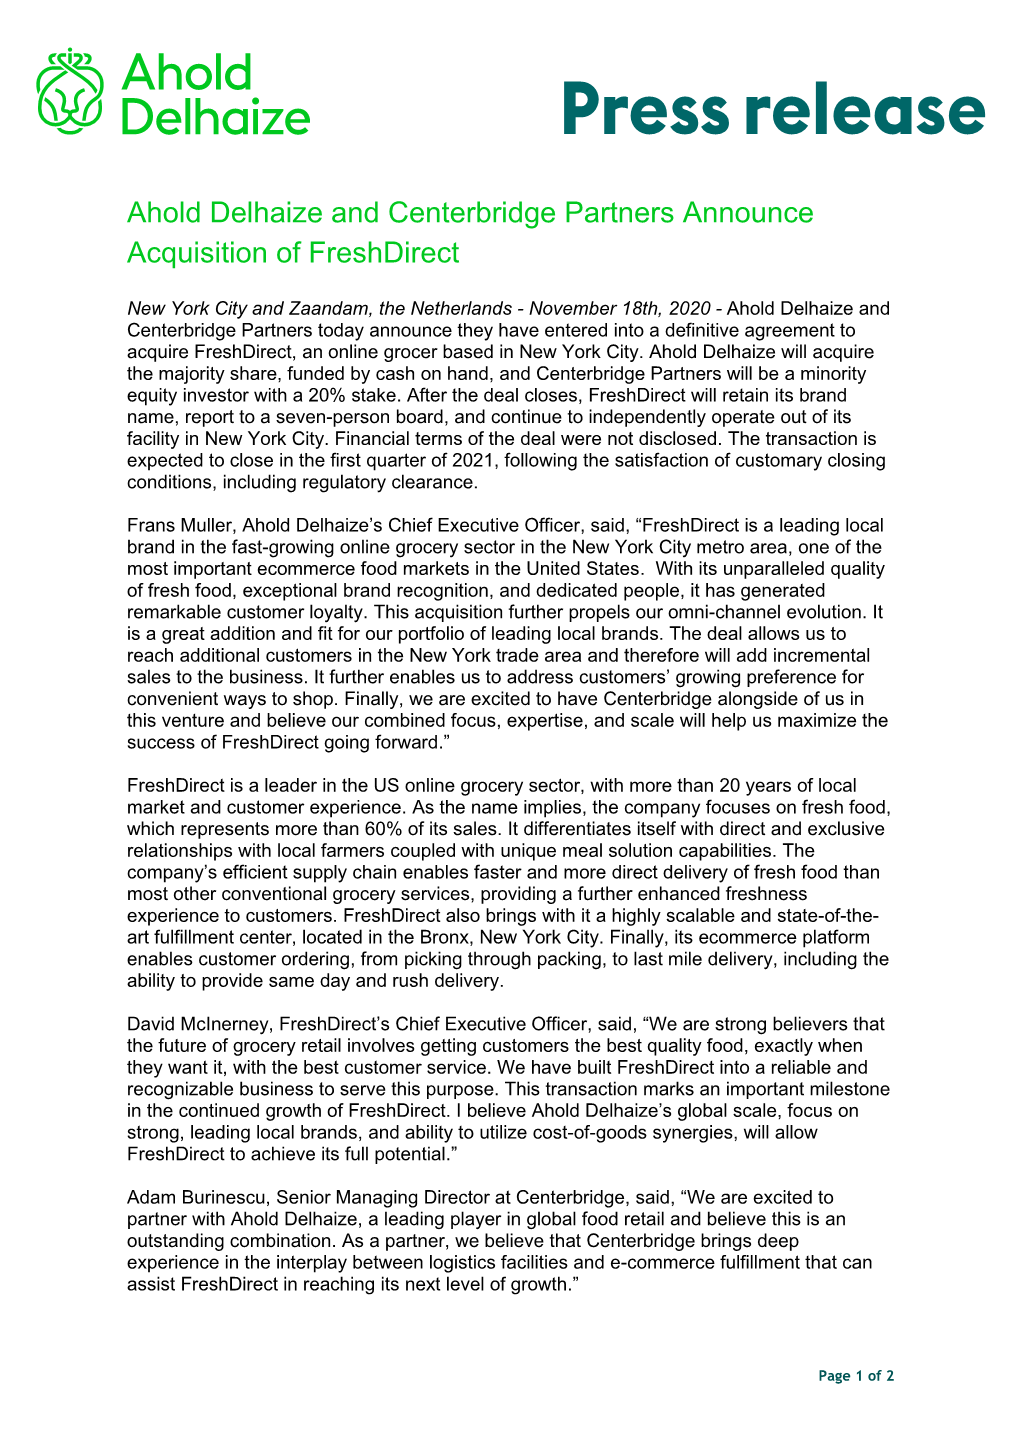 Ahold Delhaize and Centerbridge Partners Announce Acquisition of Freshdirect